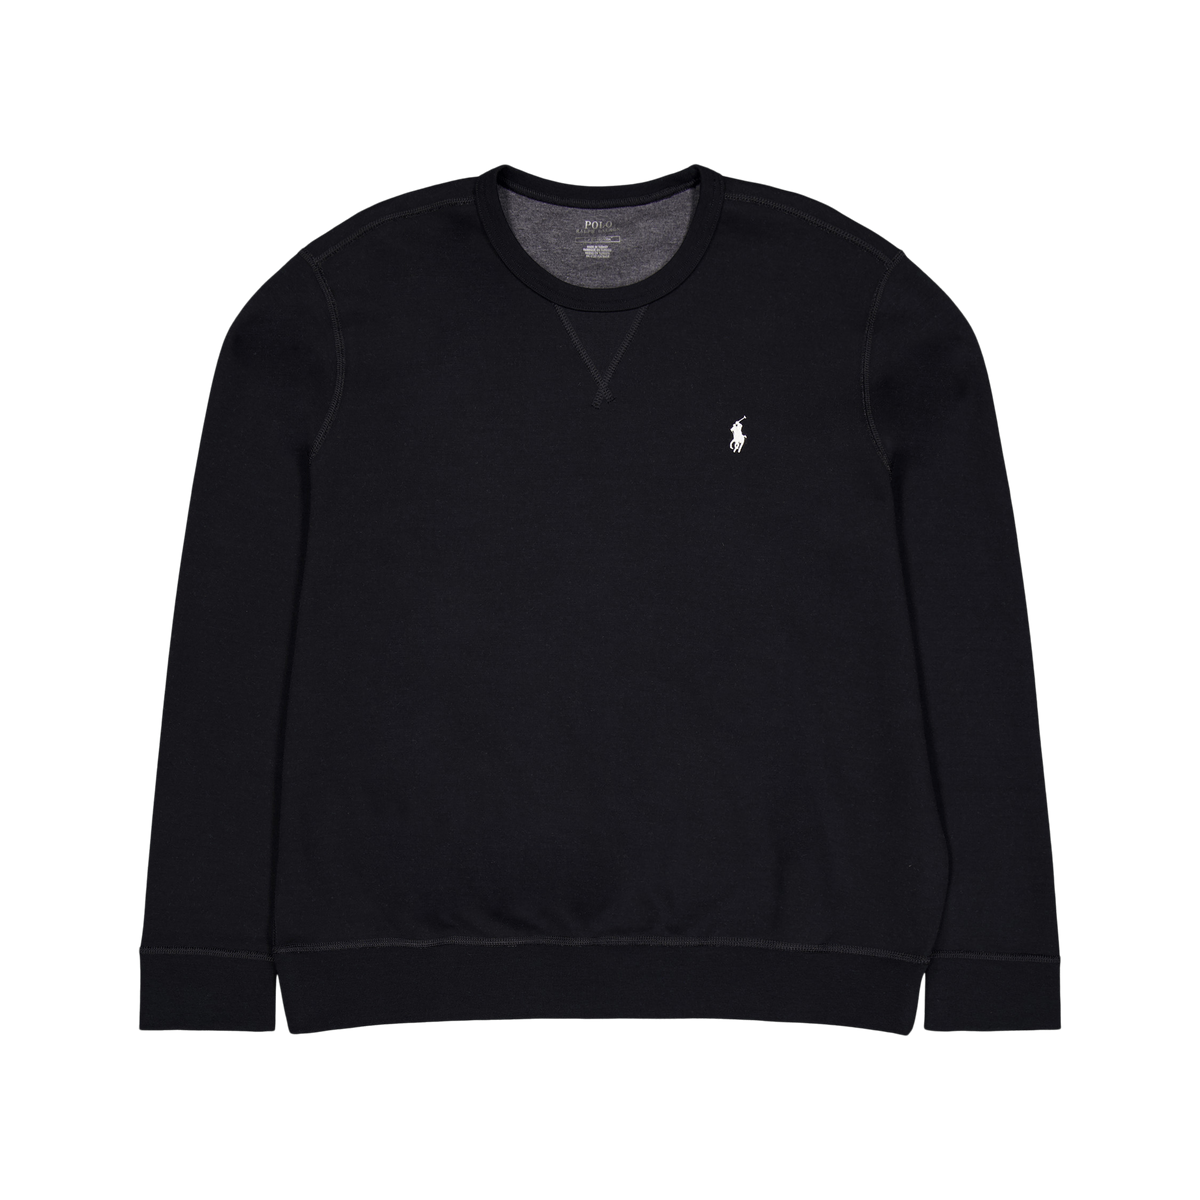 30/1 Double Knit Sweatshirt Polo Black/cream Pp